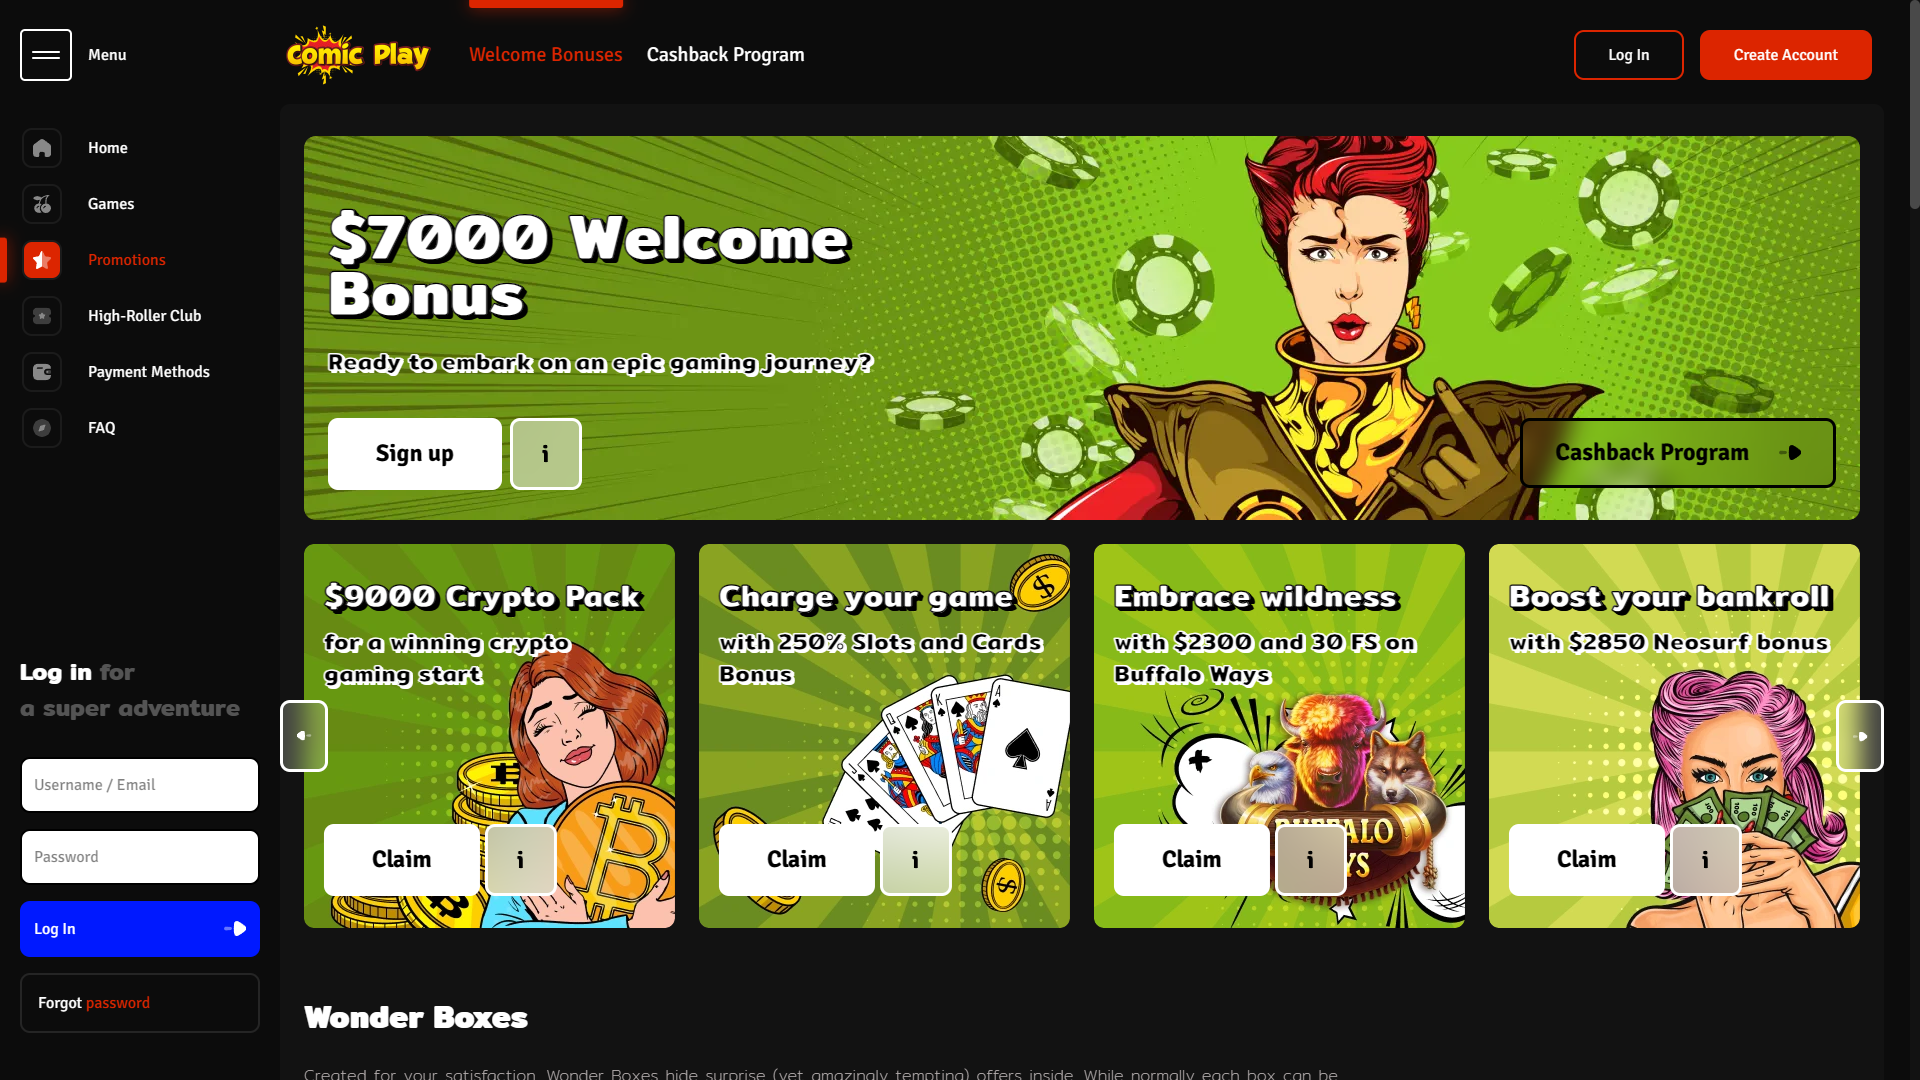 ComicPlay Casino Promotions